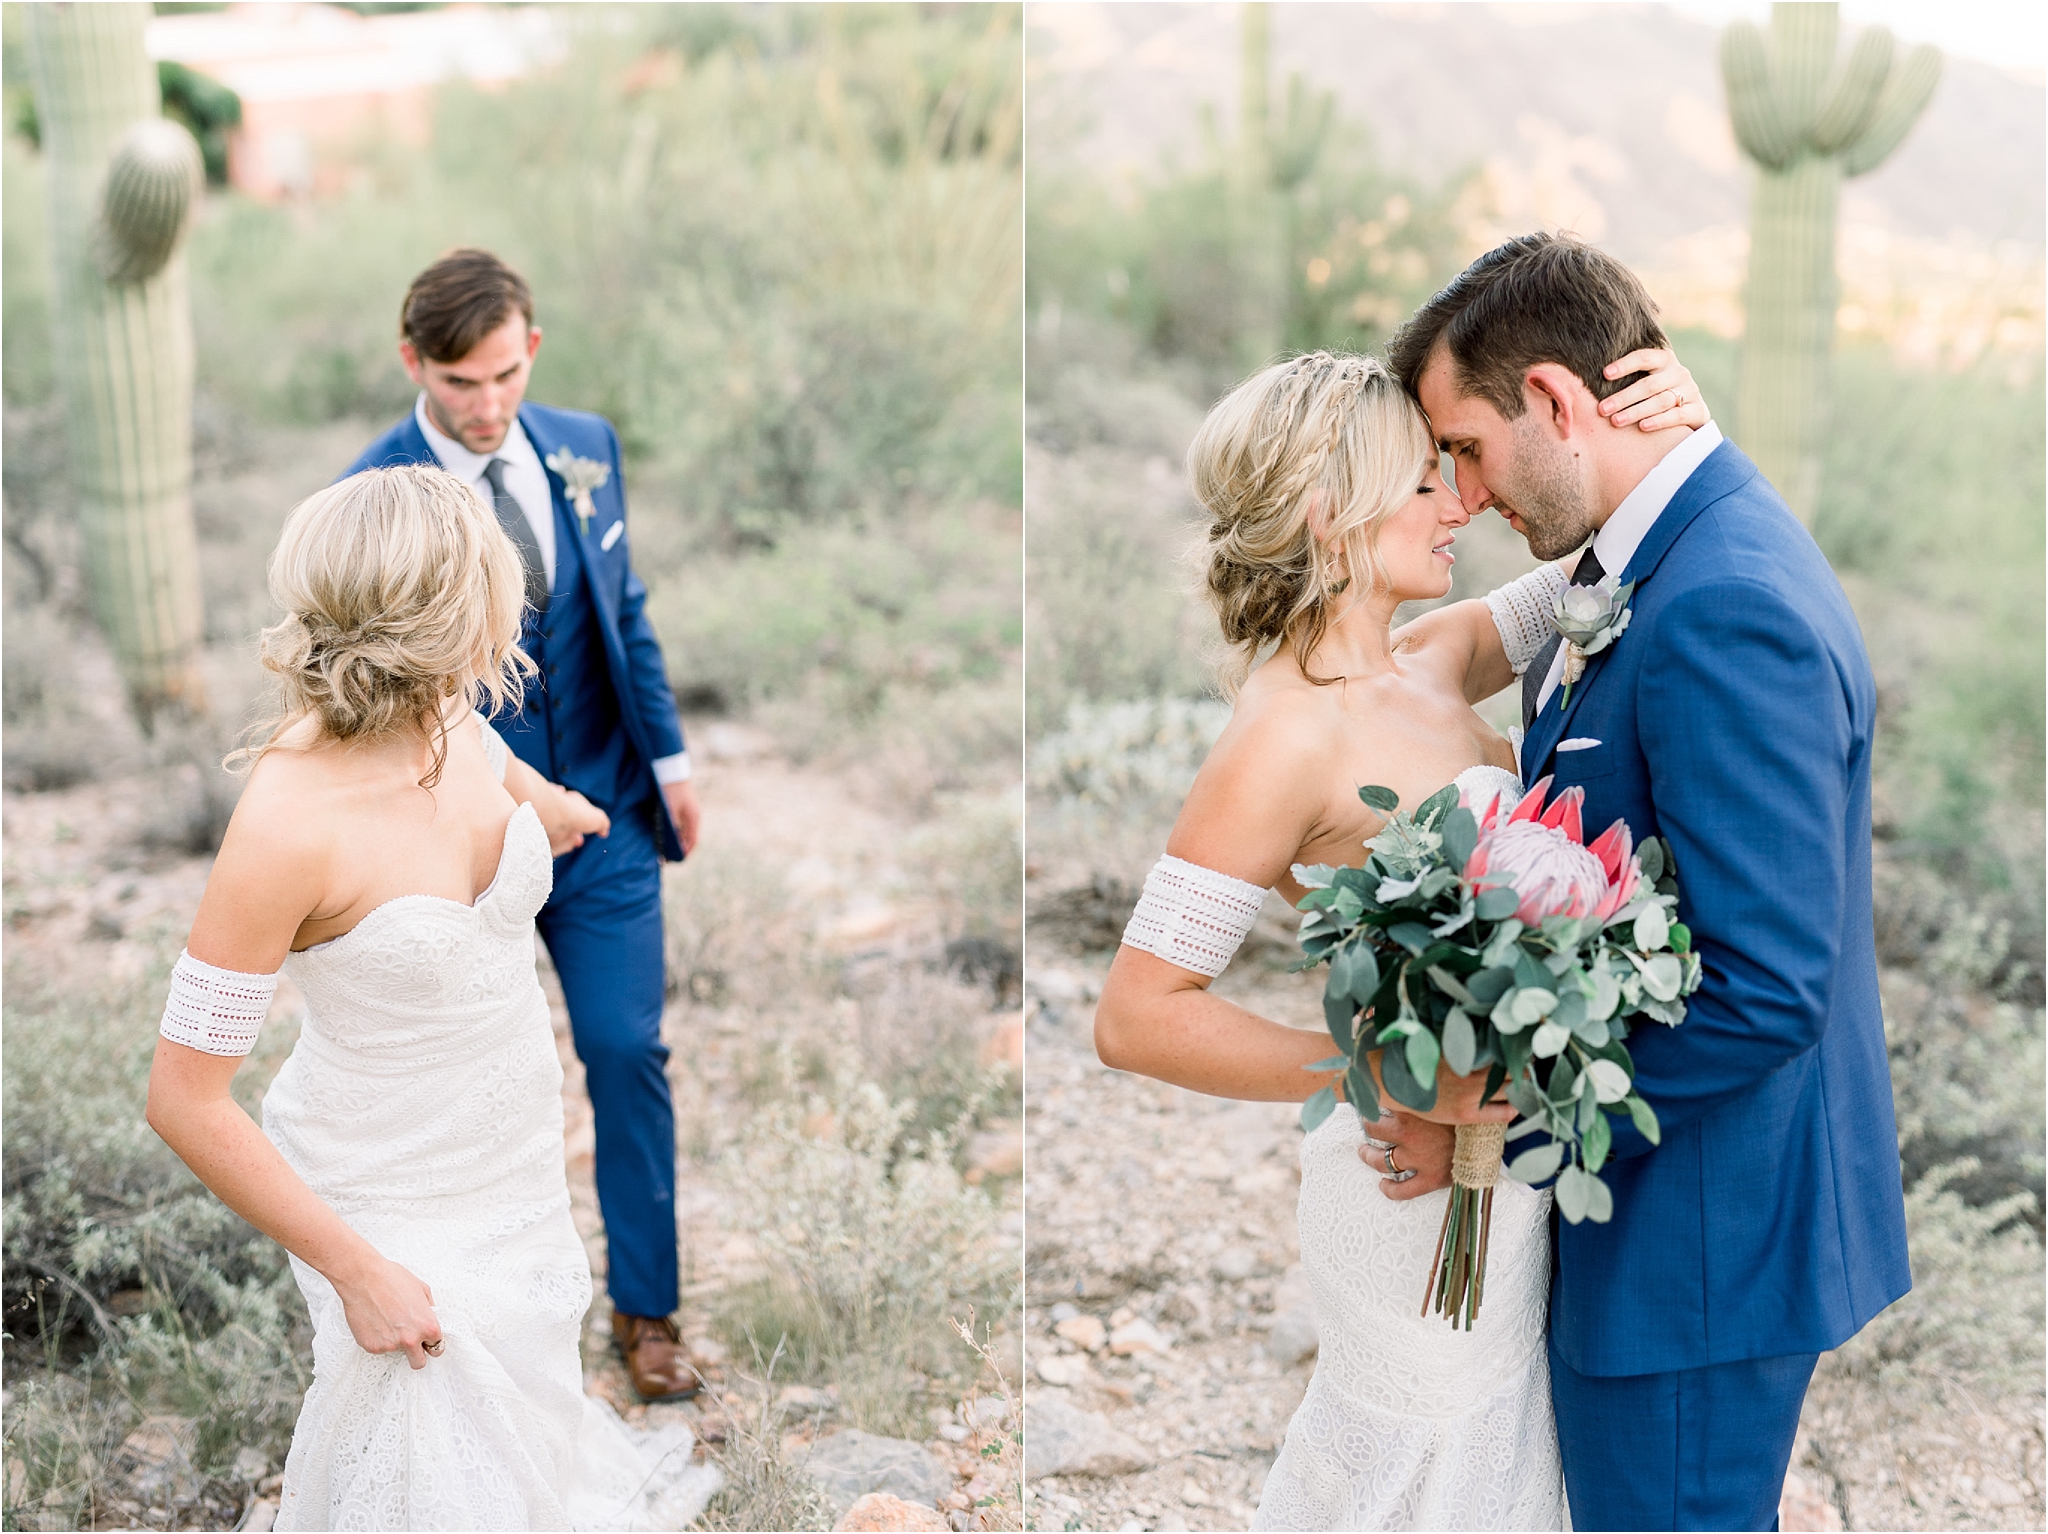 Hacienda Del Sol Wedding Tucson AZ Vanessa and Nate bride and groom portraits | West End Photography